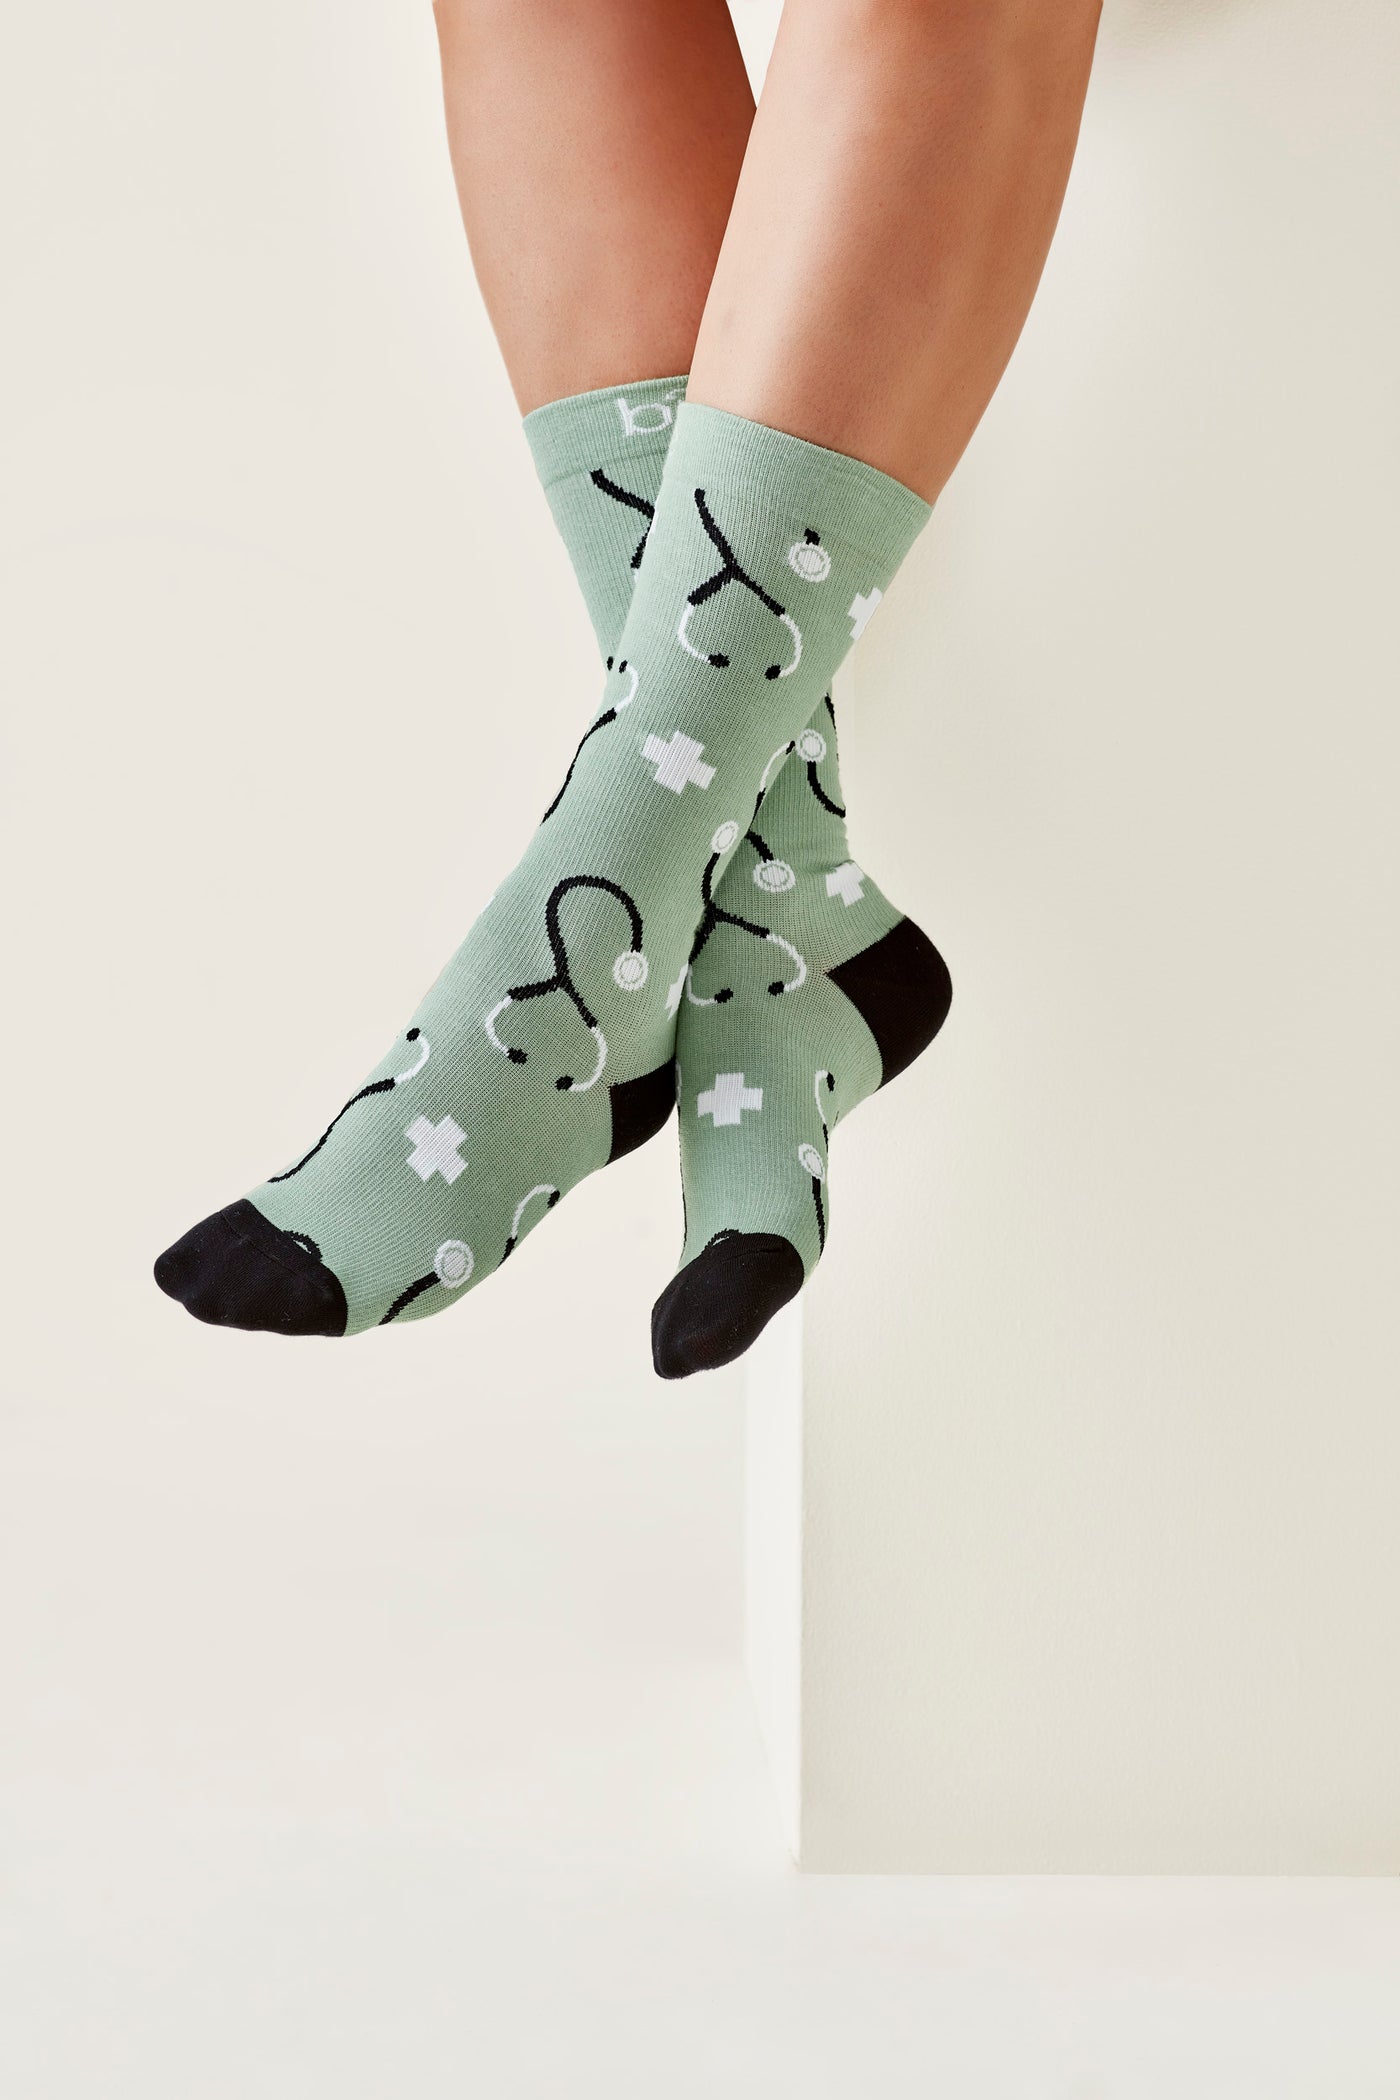 Biz Care Happy Feet Comfort Socks - Unisex